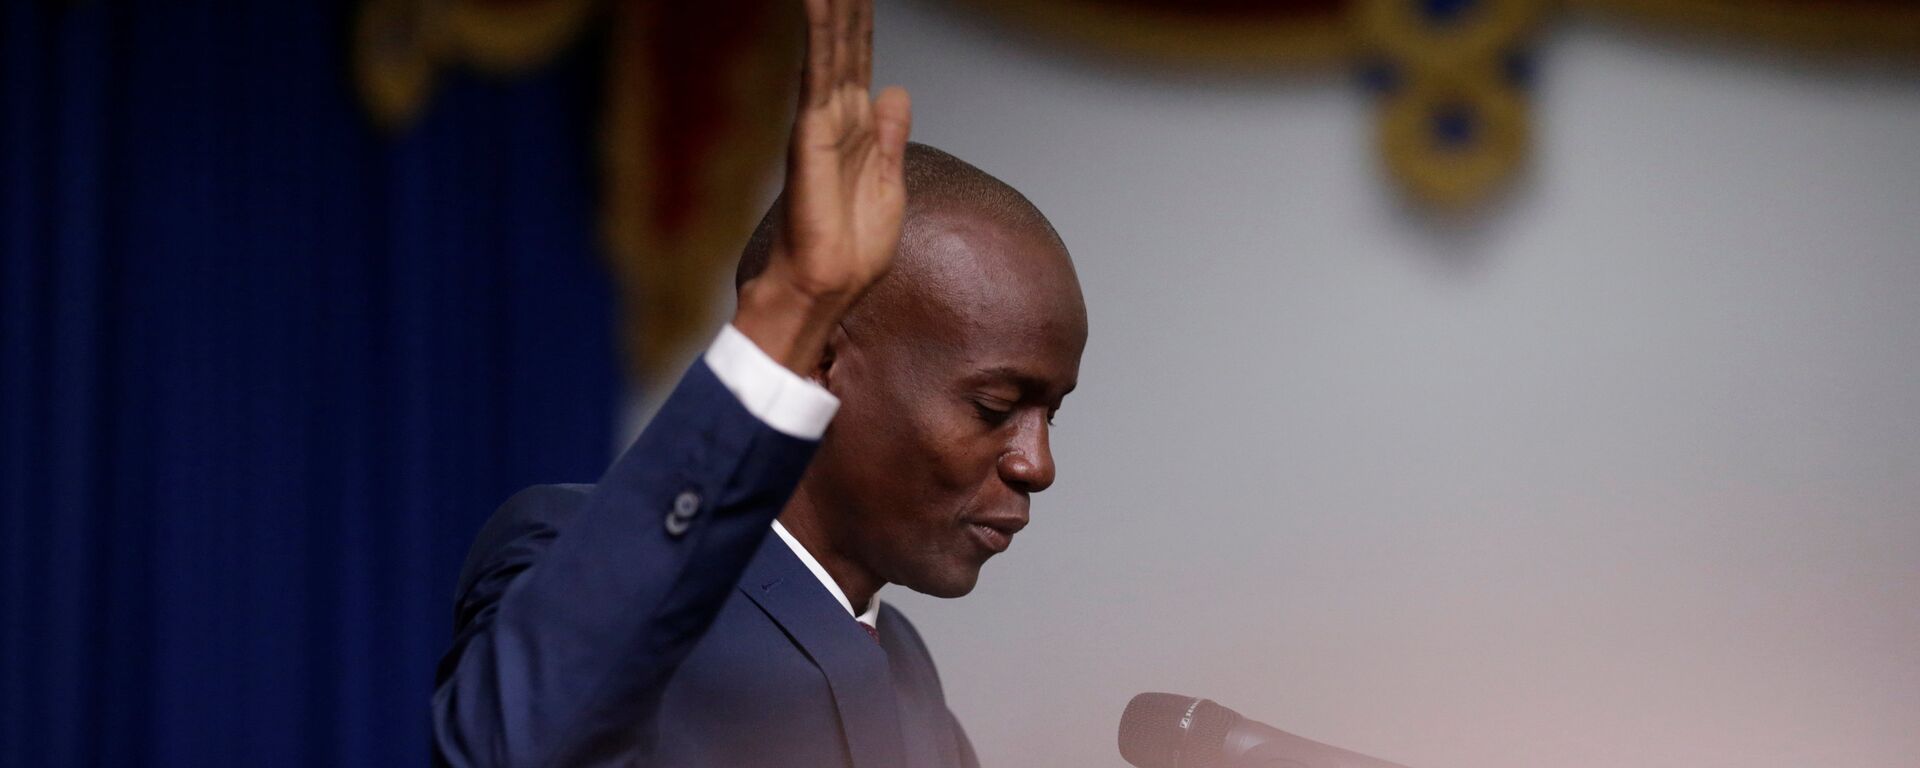 Haitian President Jovenel Moise takes the oath of office during his inauguration in Port-au-Prince, Haiti February 7, 2017 - Sputnik Mundo, 1920, 16.07.2021